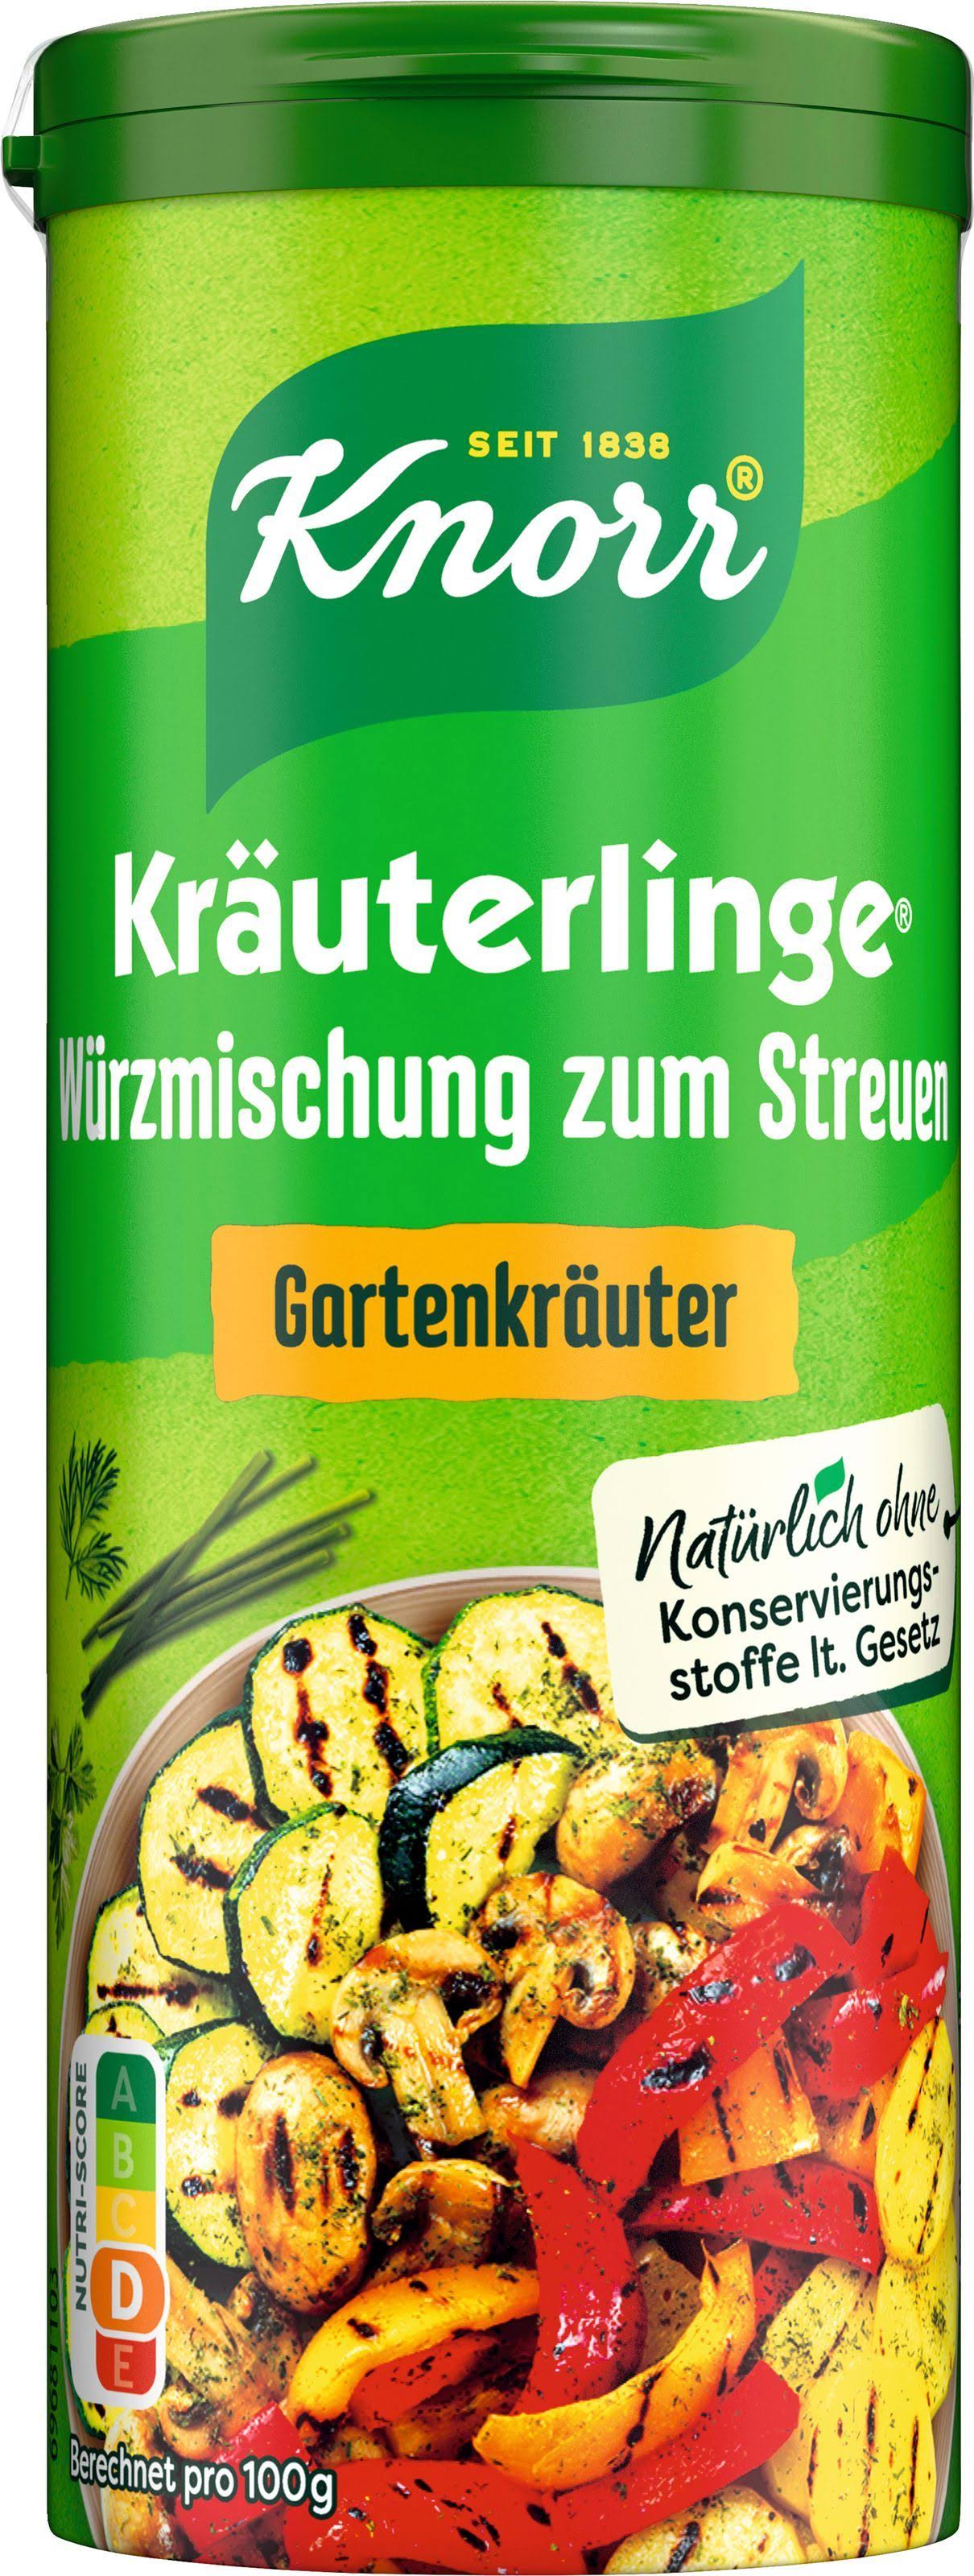 Knorr Garden Herbs Seasoning Mix - 2.1oz